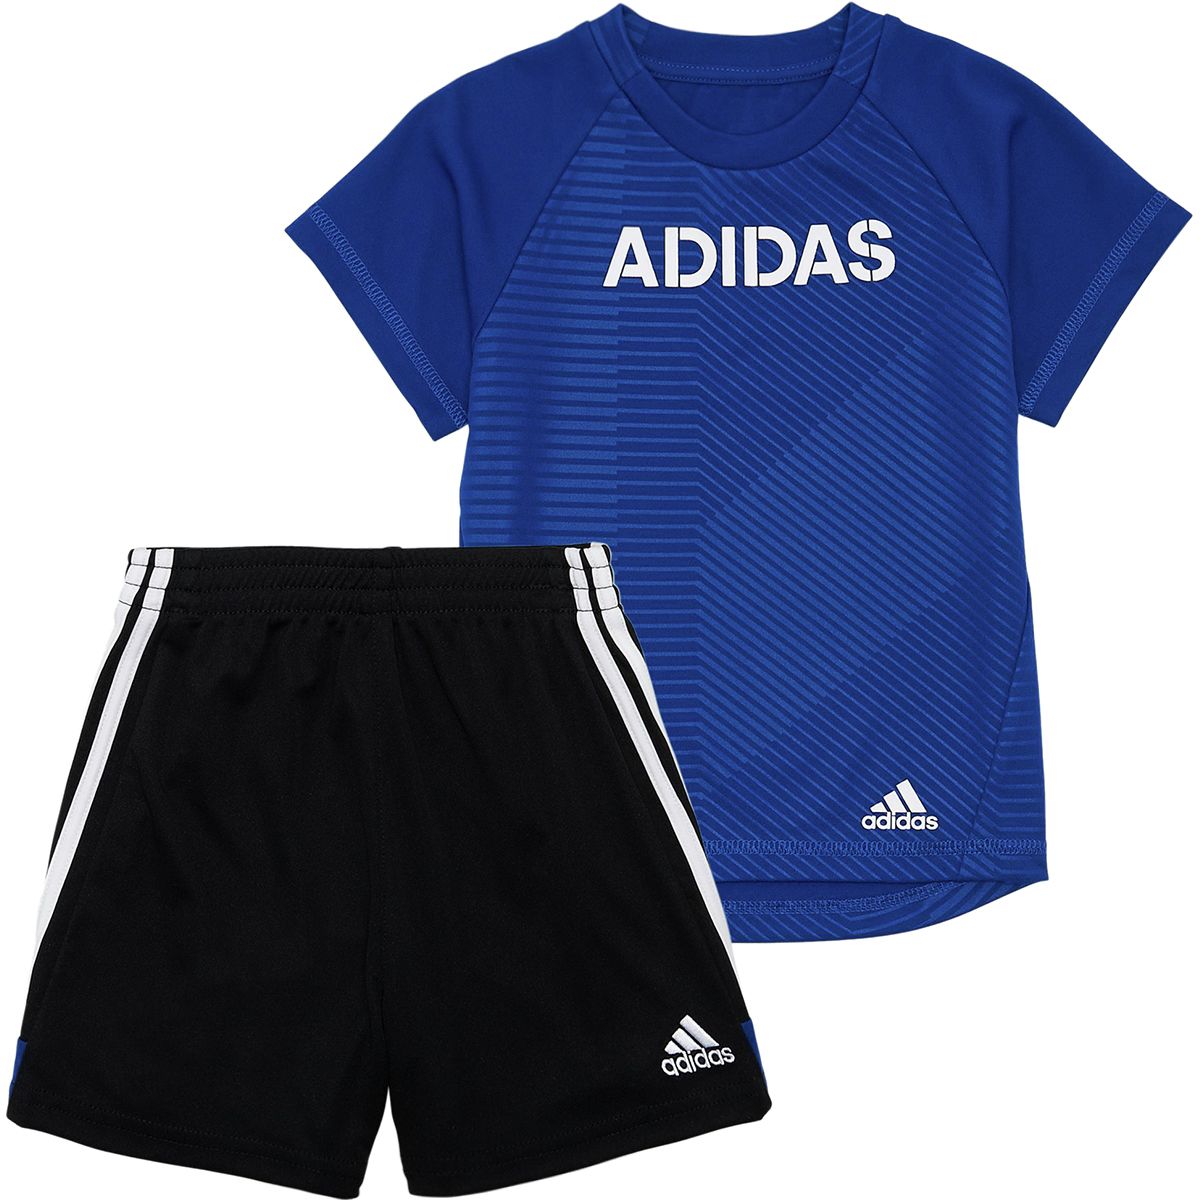 Adidas Flag Strong Short Set - Infant Boys' - Kids